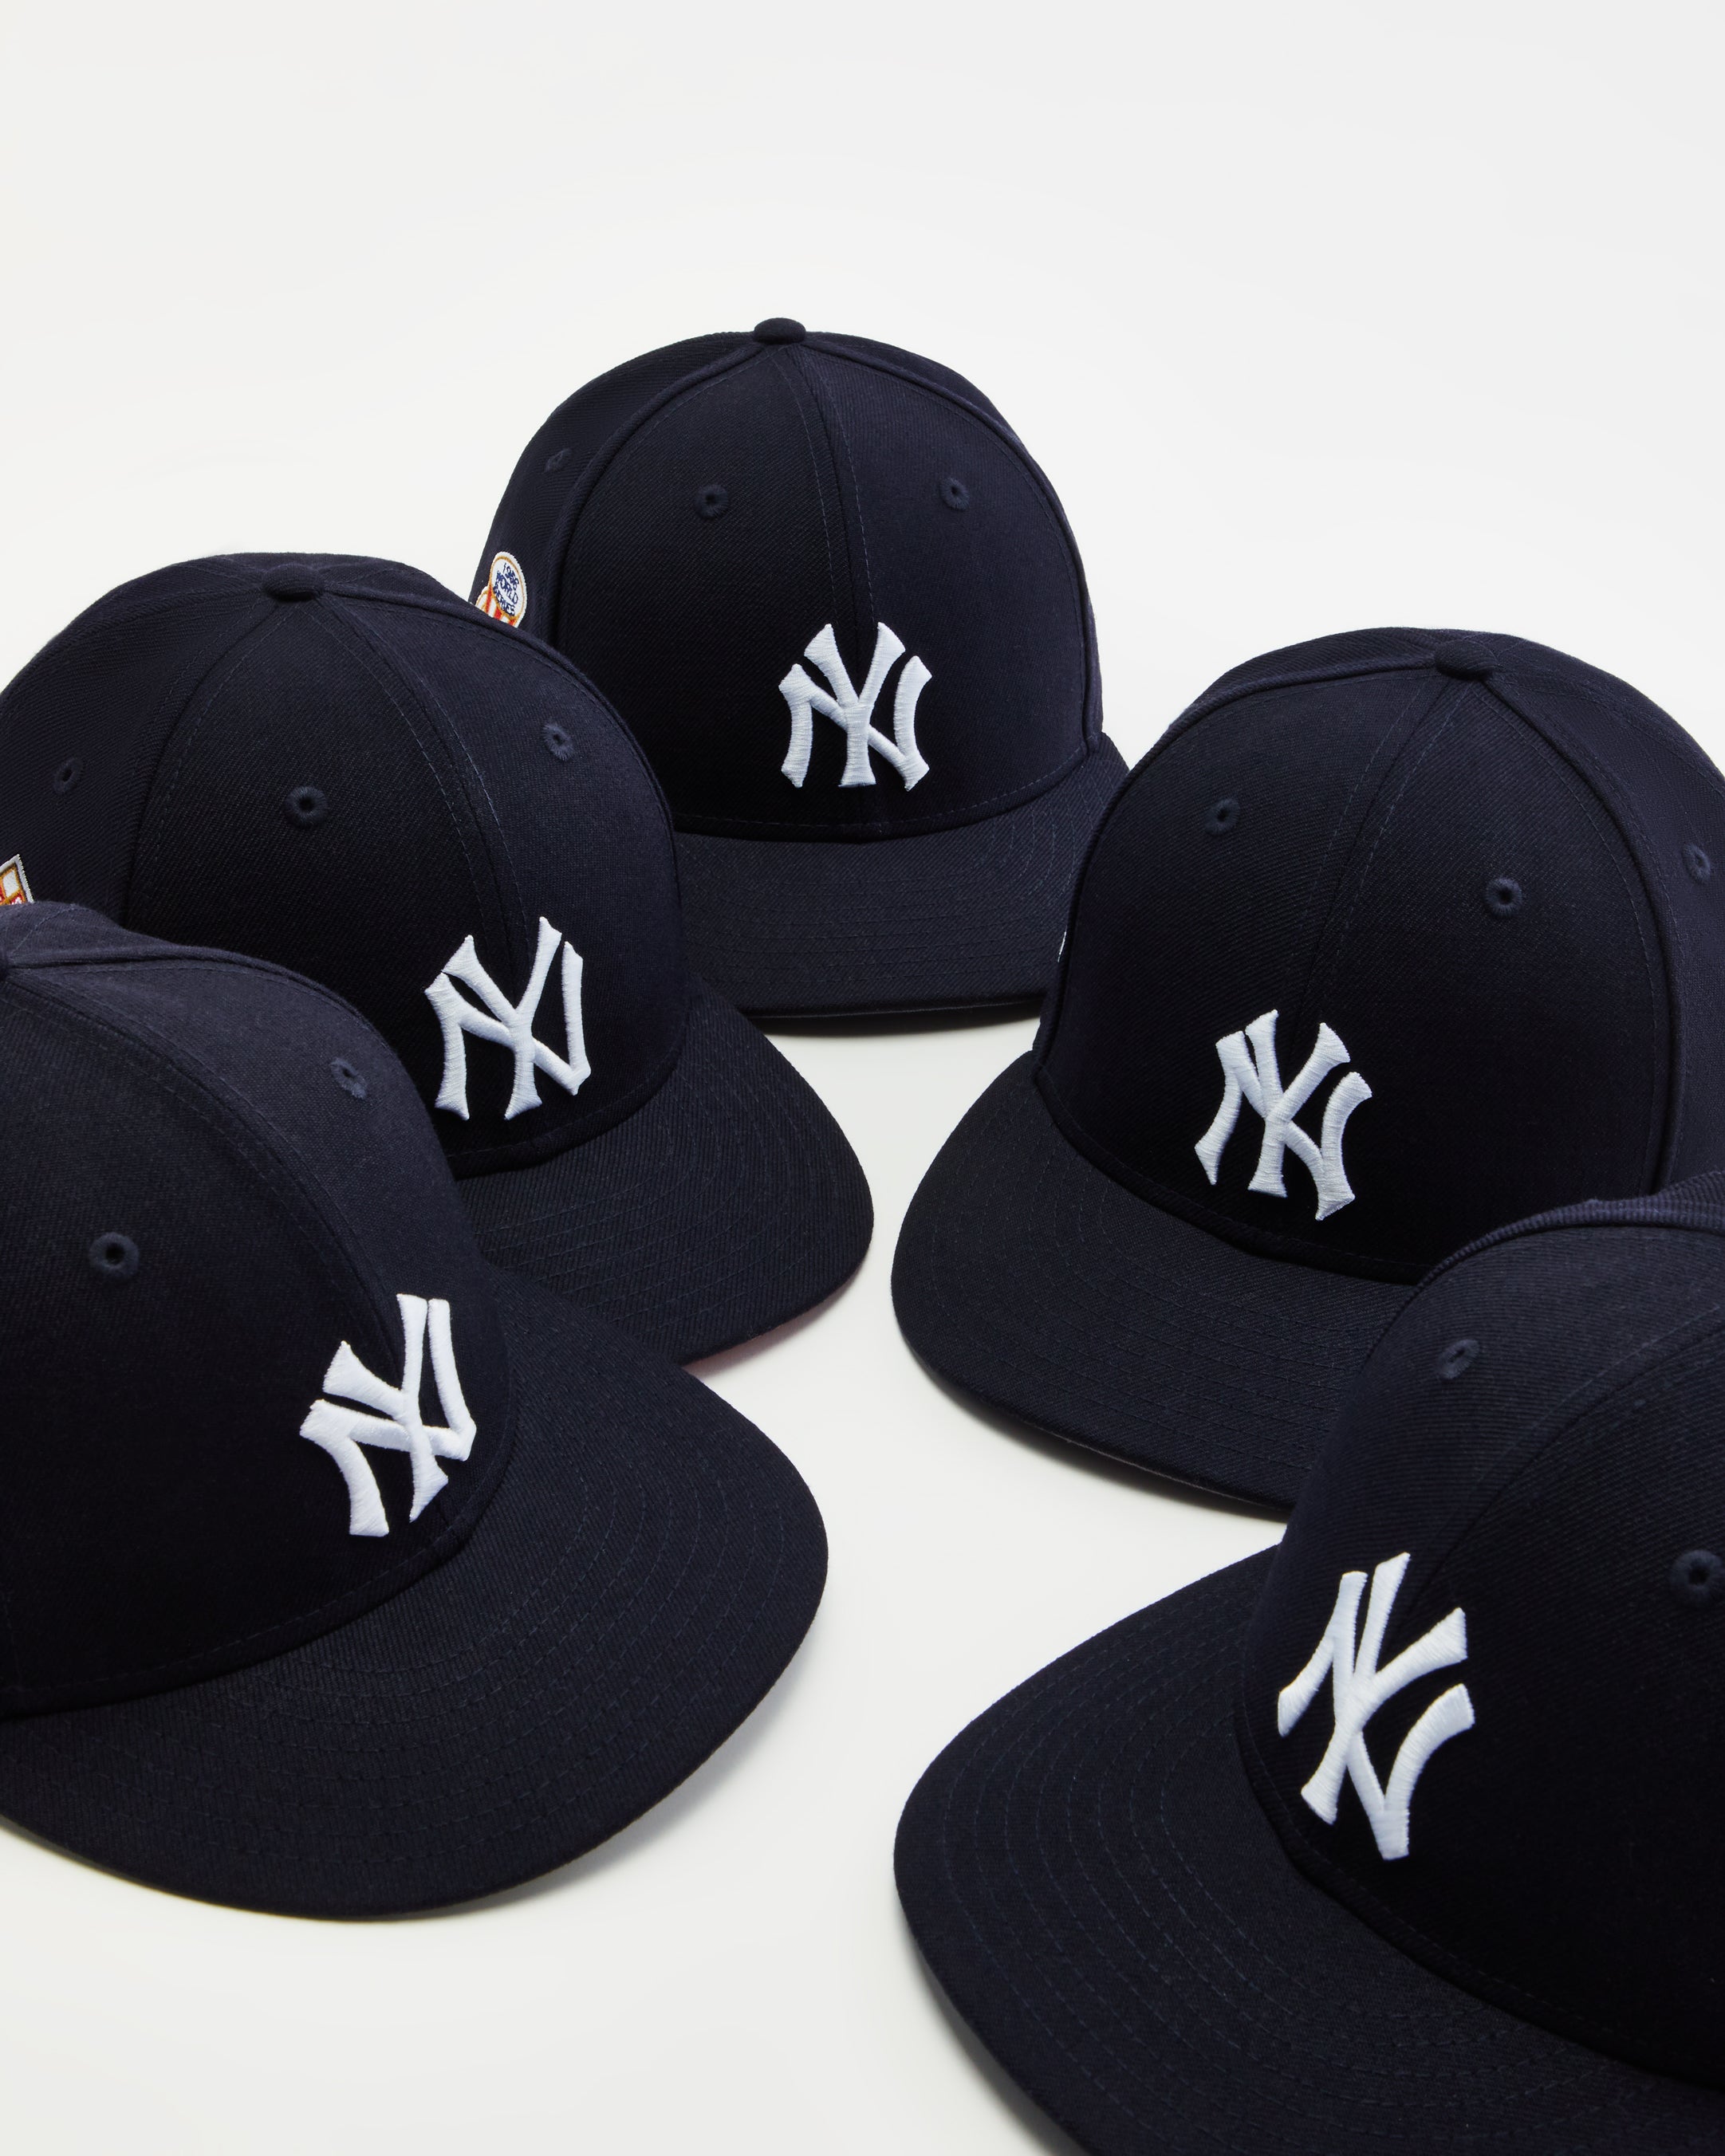 Kith for New Era & Yankees World Series